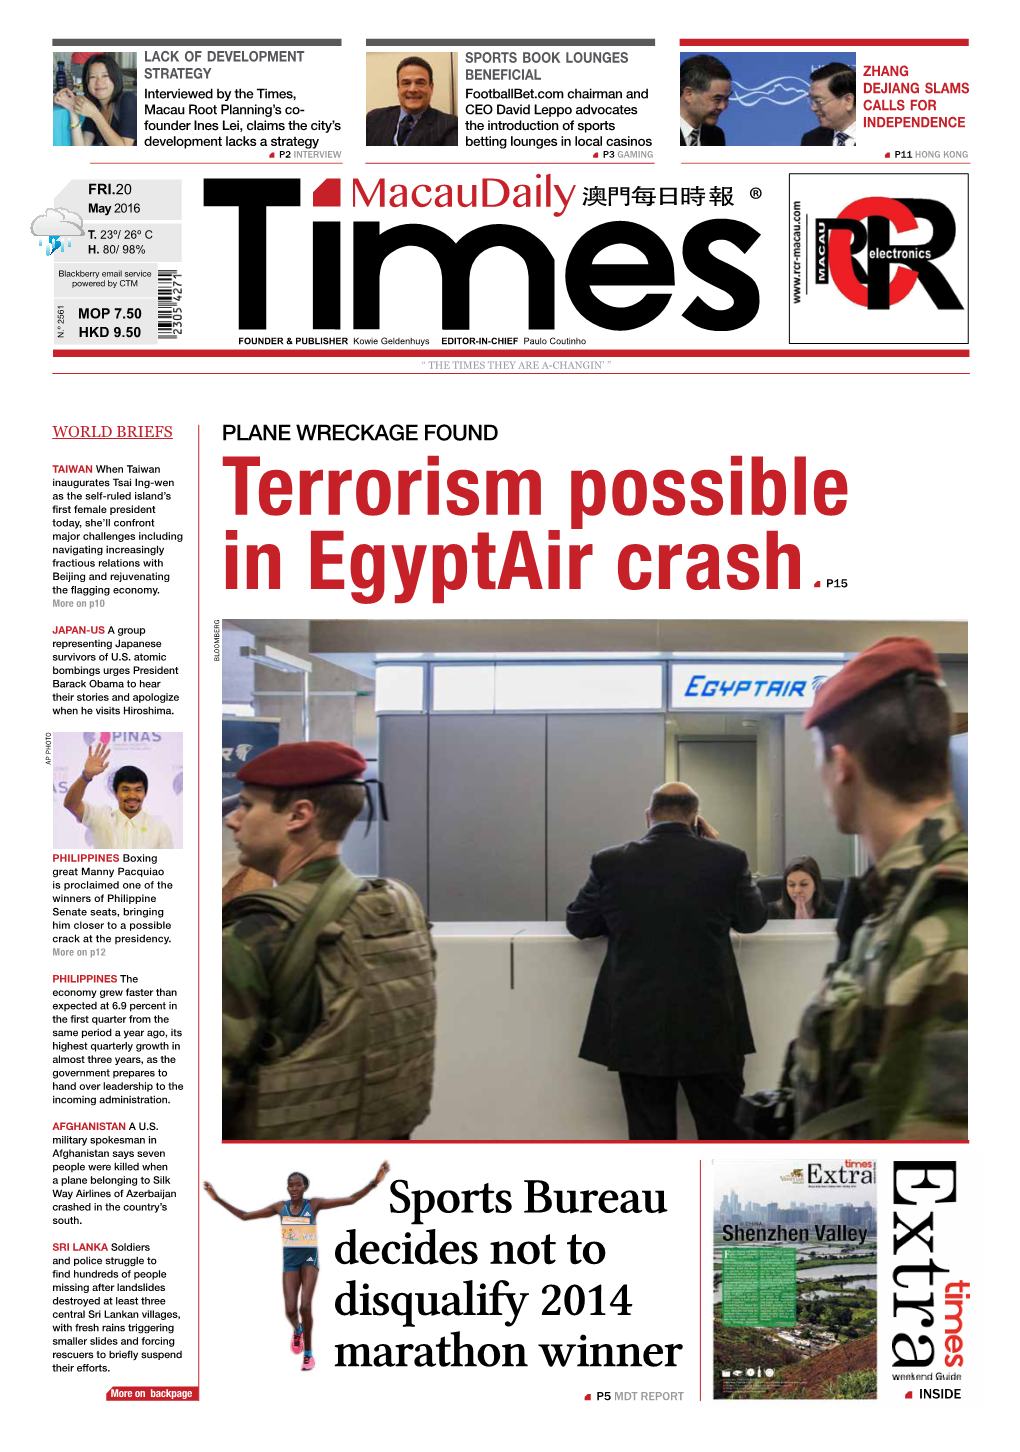 Terrorism Possible in Egyptair Crash